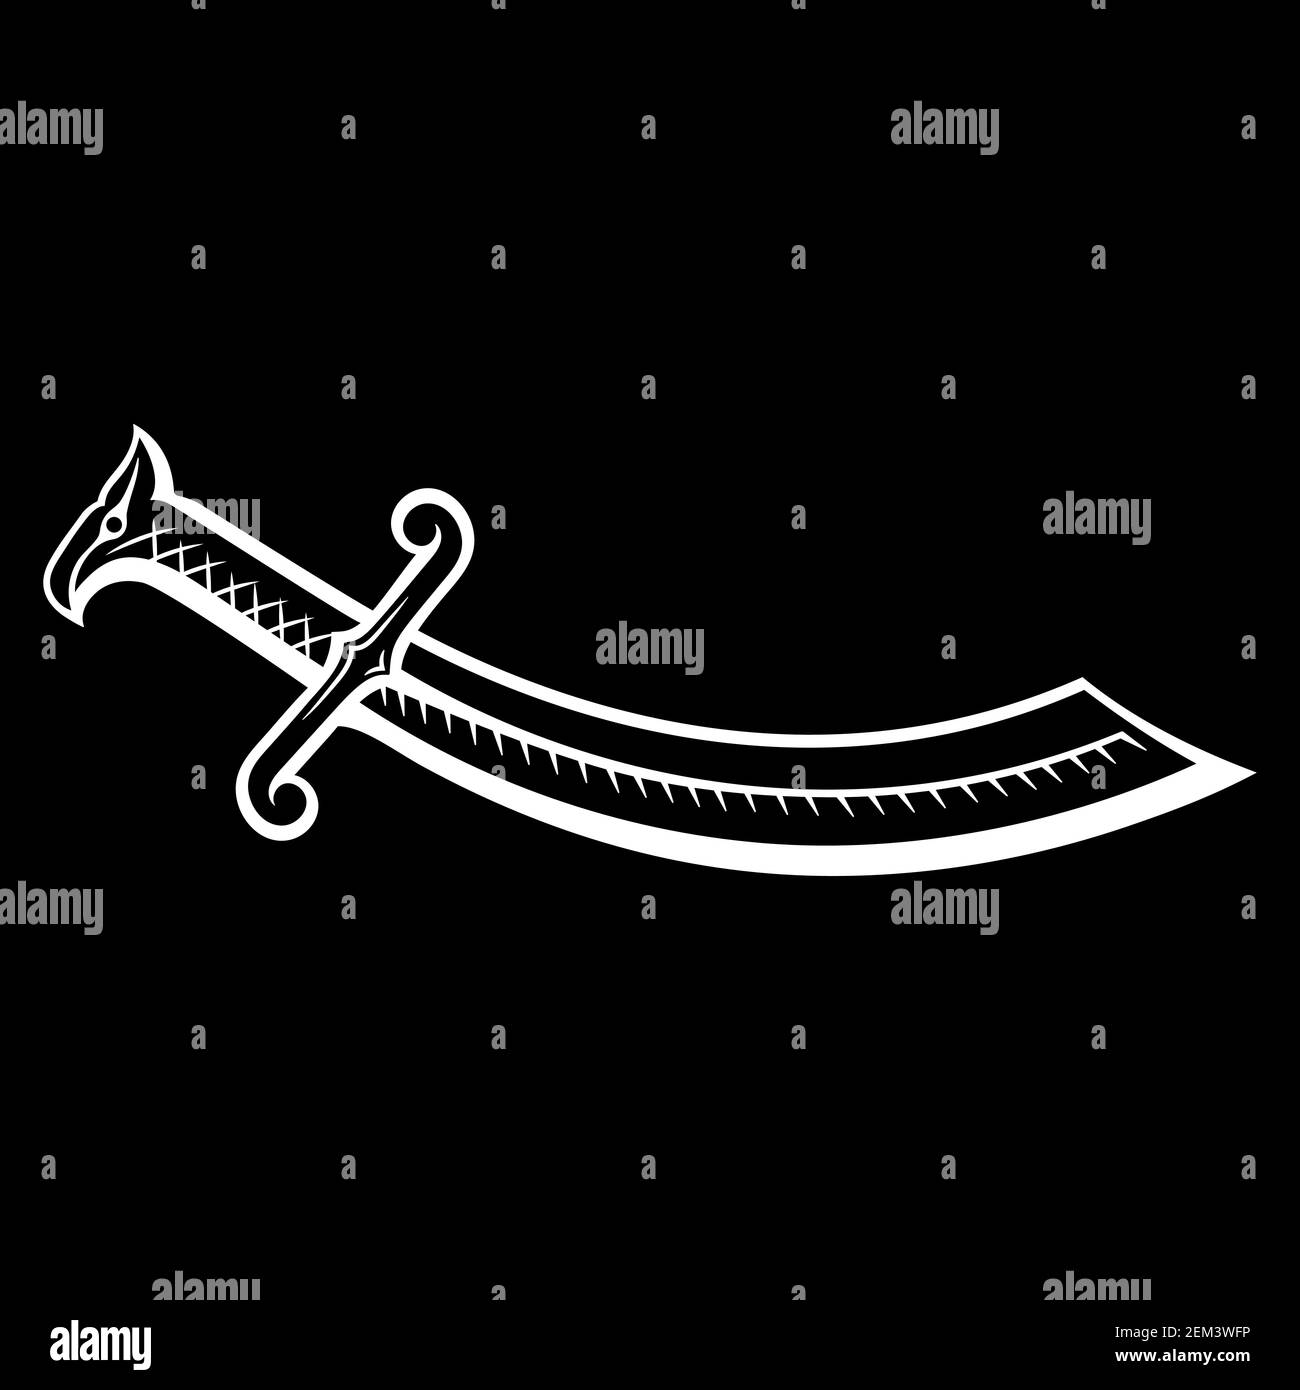 King arthur battle Stock Vector Images - Alamy